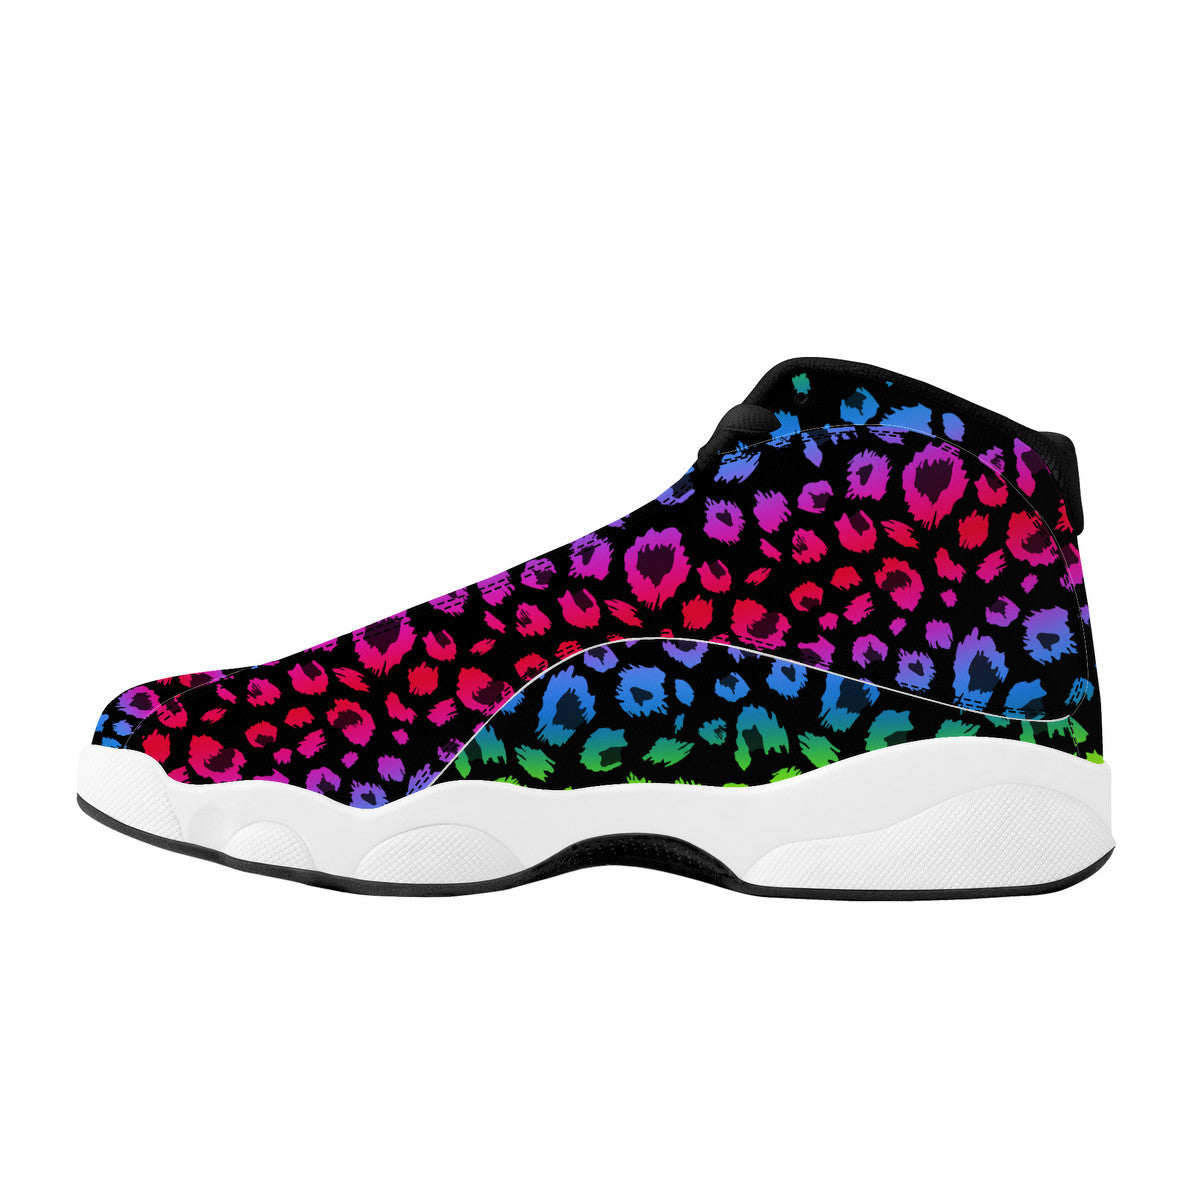 "Jaguar" Basketball Shoes